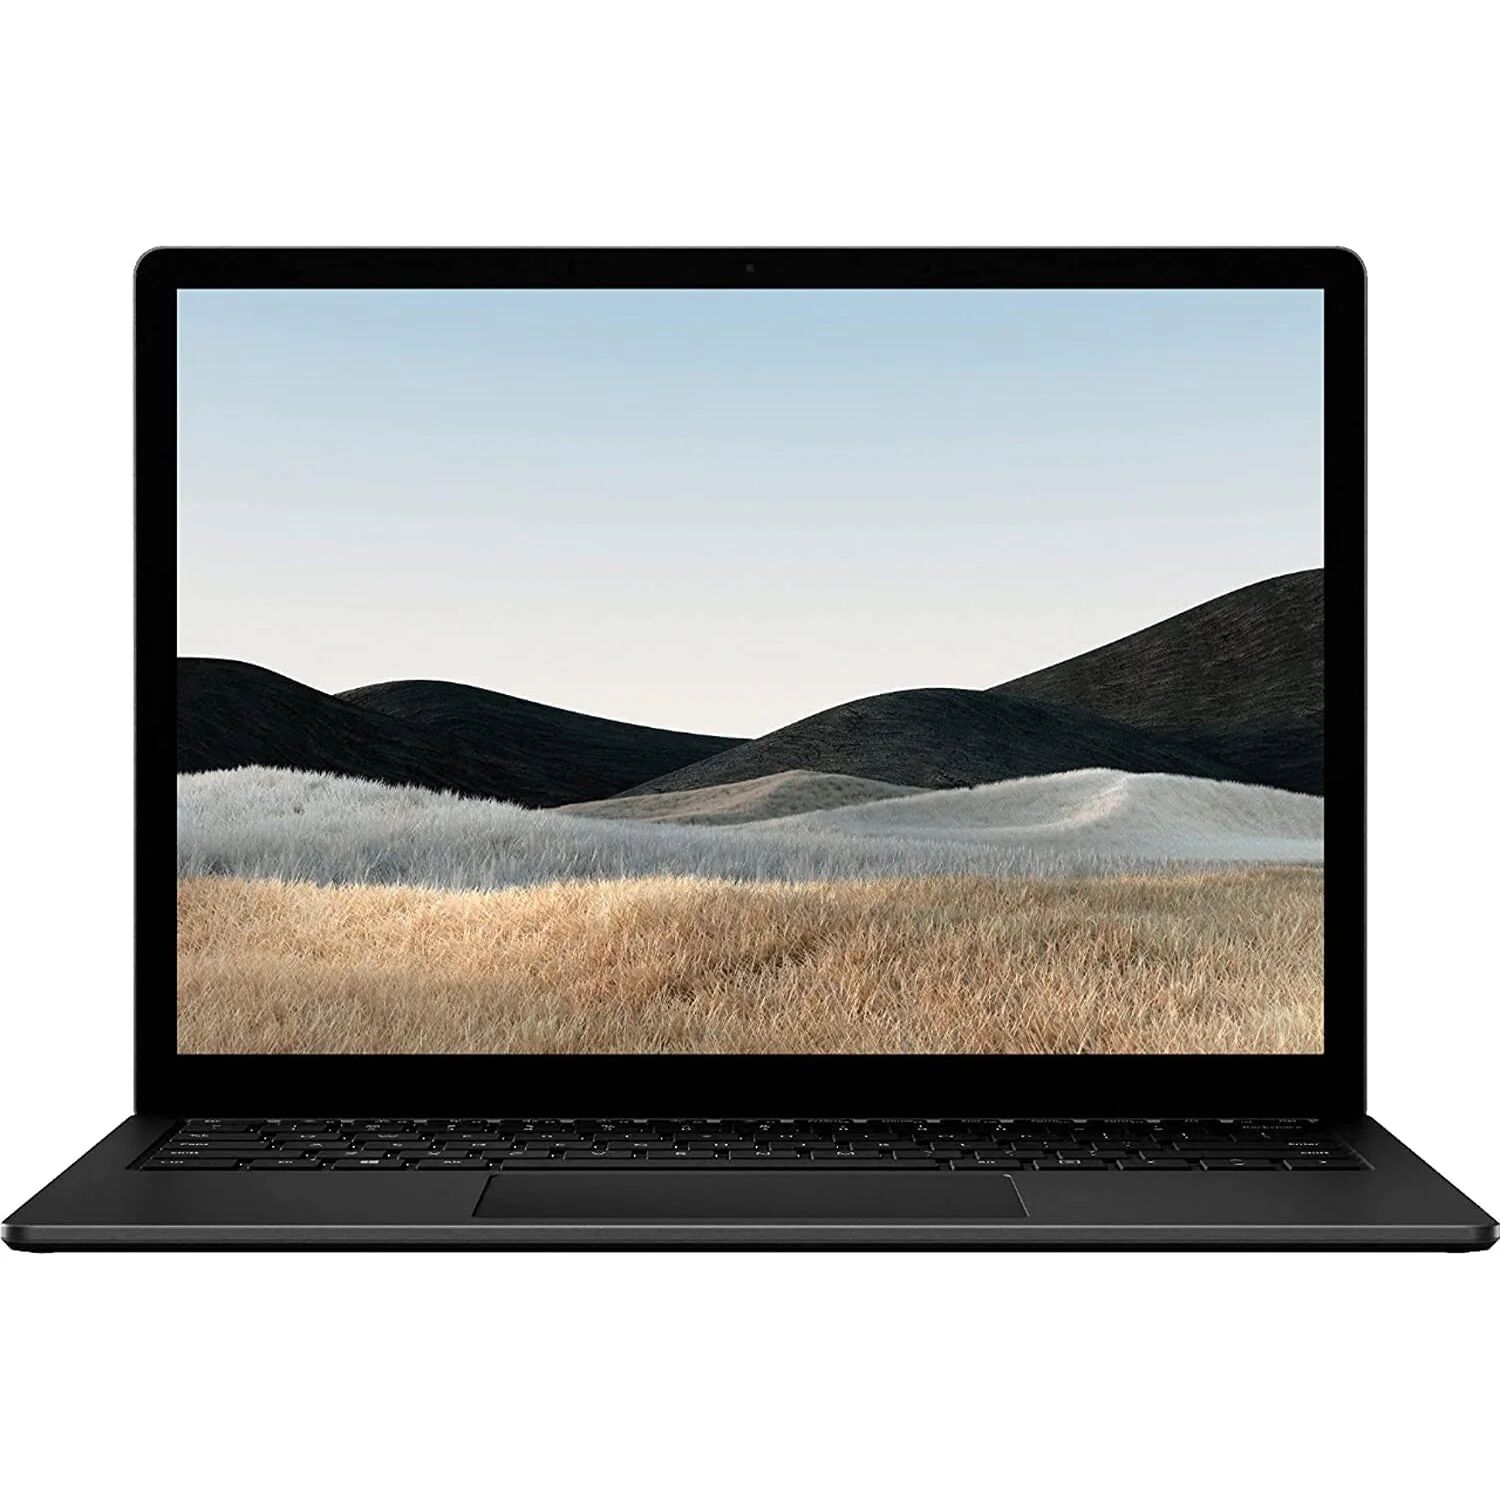 DailySale Microsoft Surface Laptop 4 13.5" I7 16GB 256GB W10 Pro Matte Black Model 1951 (Refurbished)